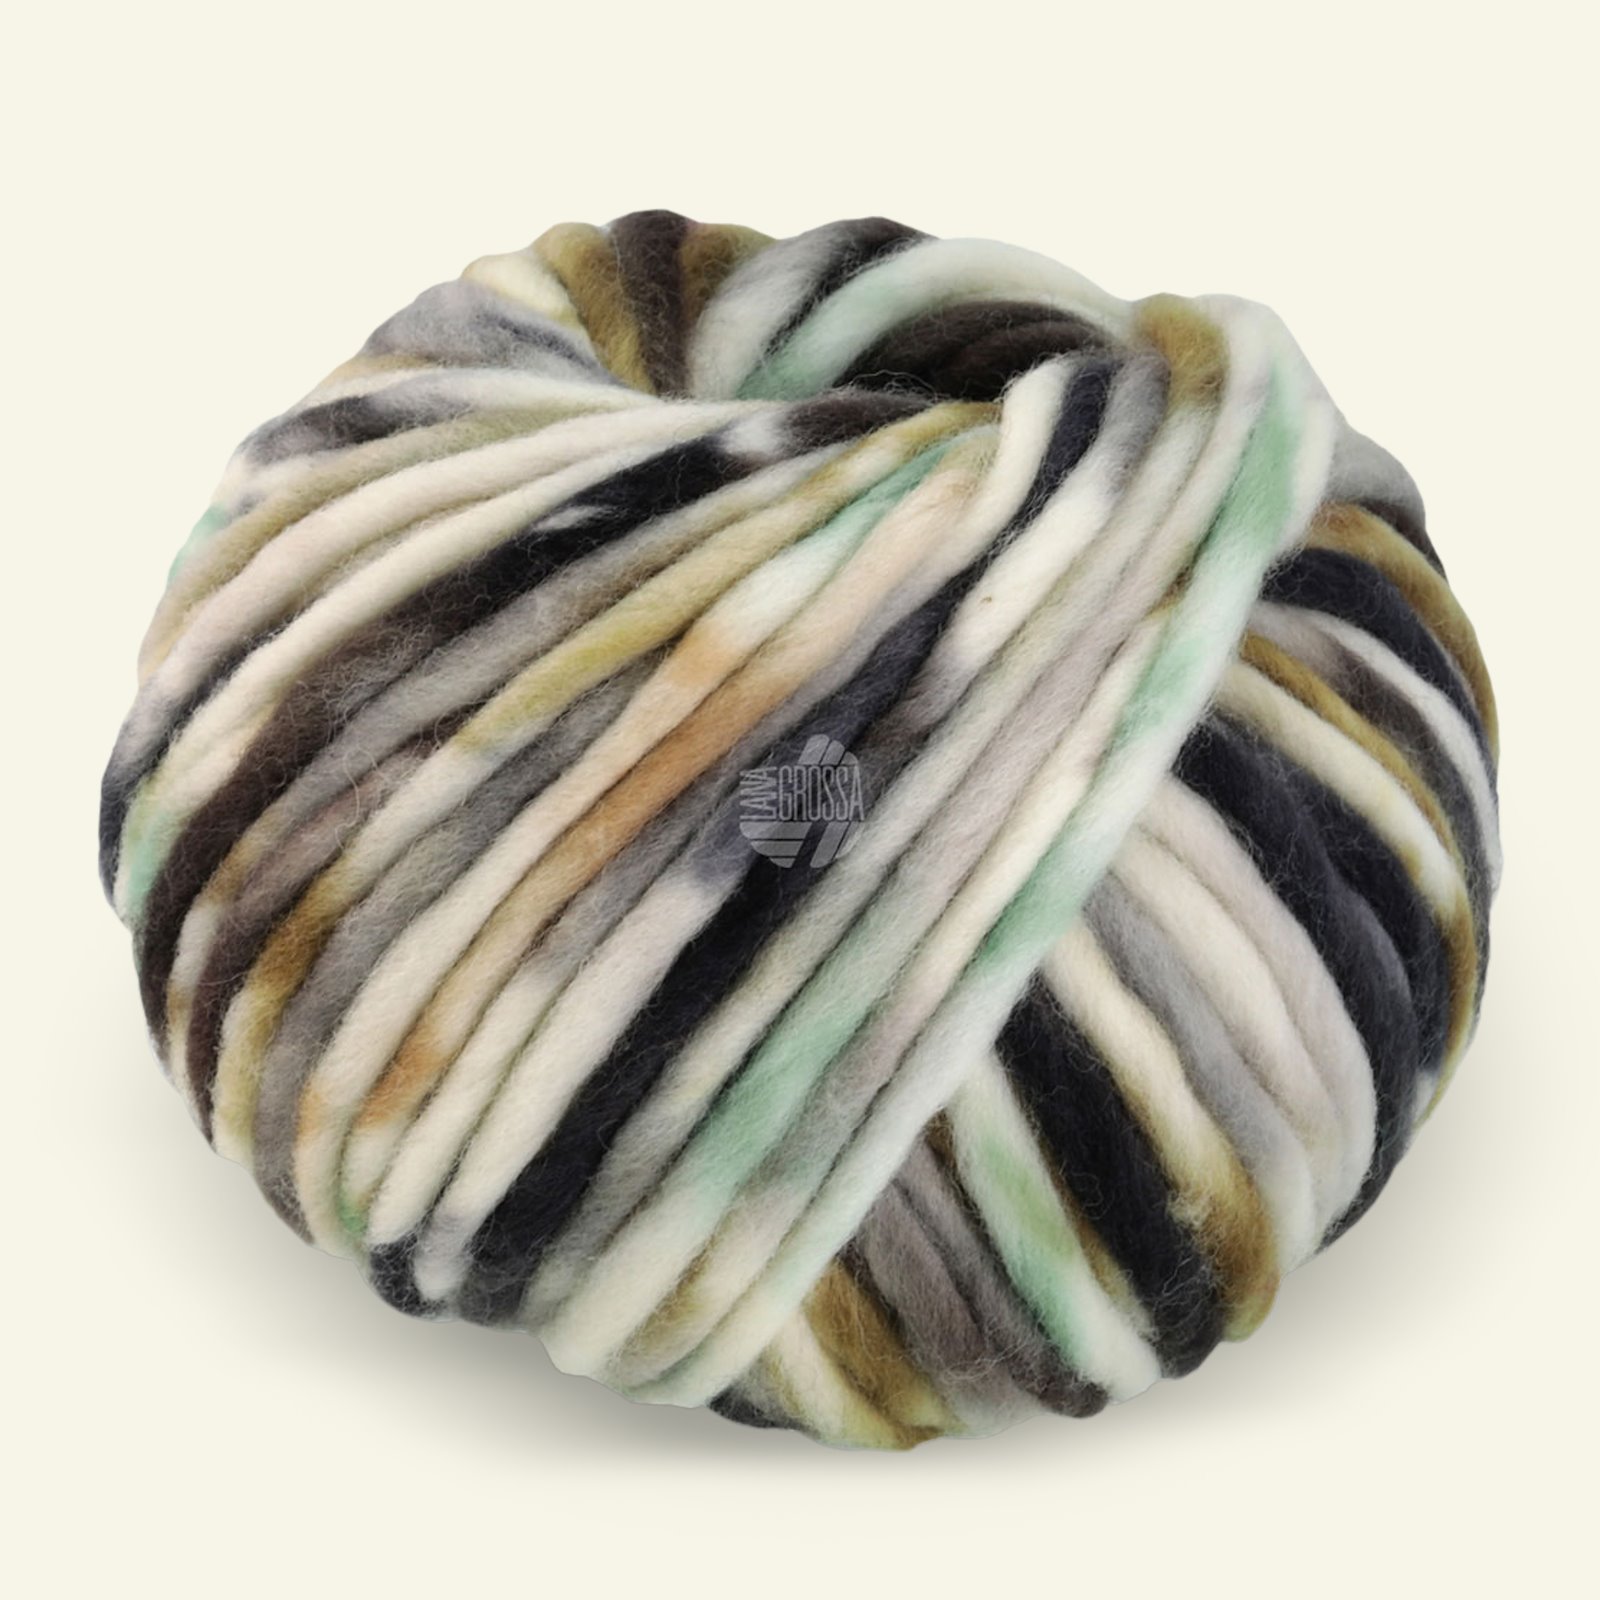 Lana Grossa, merion wool yarn "Confetti", grey/olive/black 90001063_pack